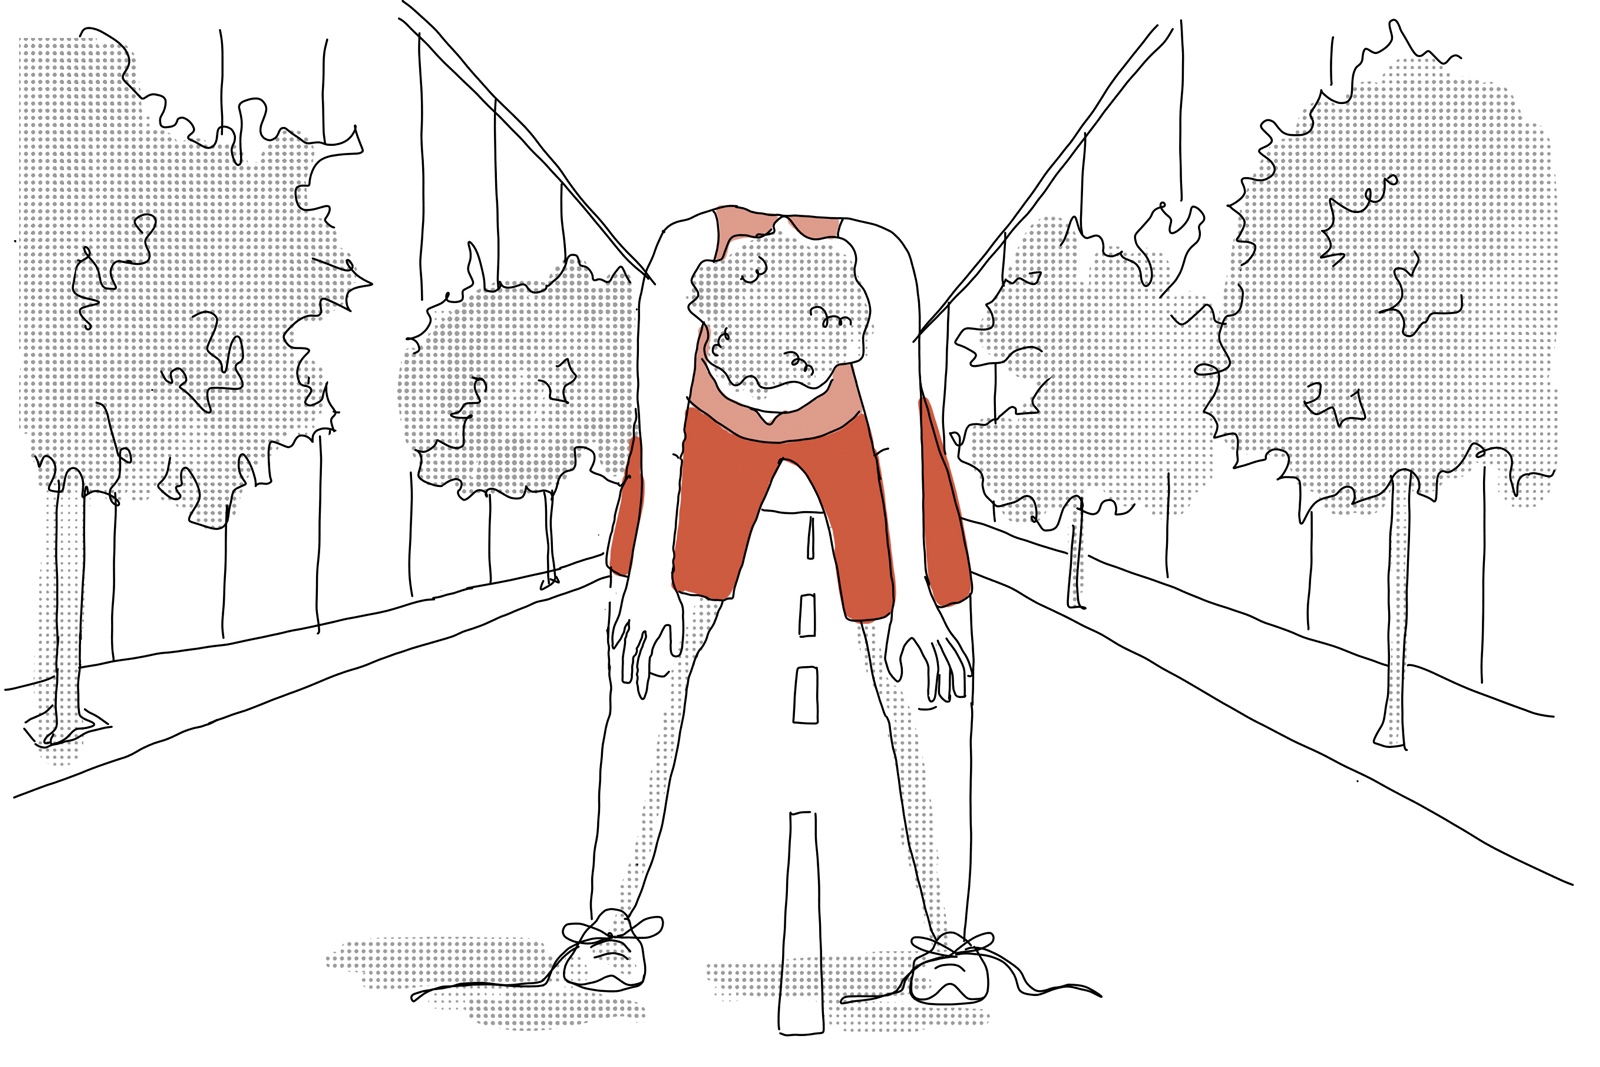 Illustration of a jogger taking a break